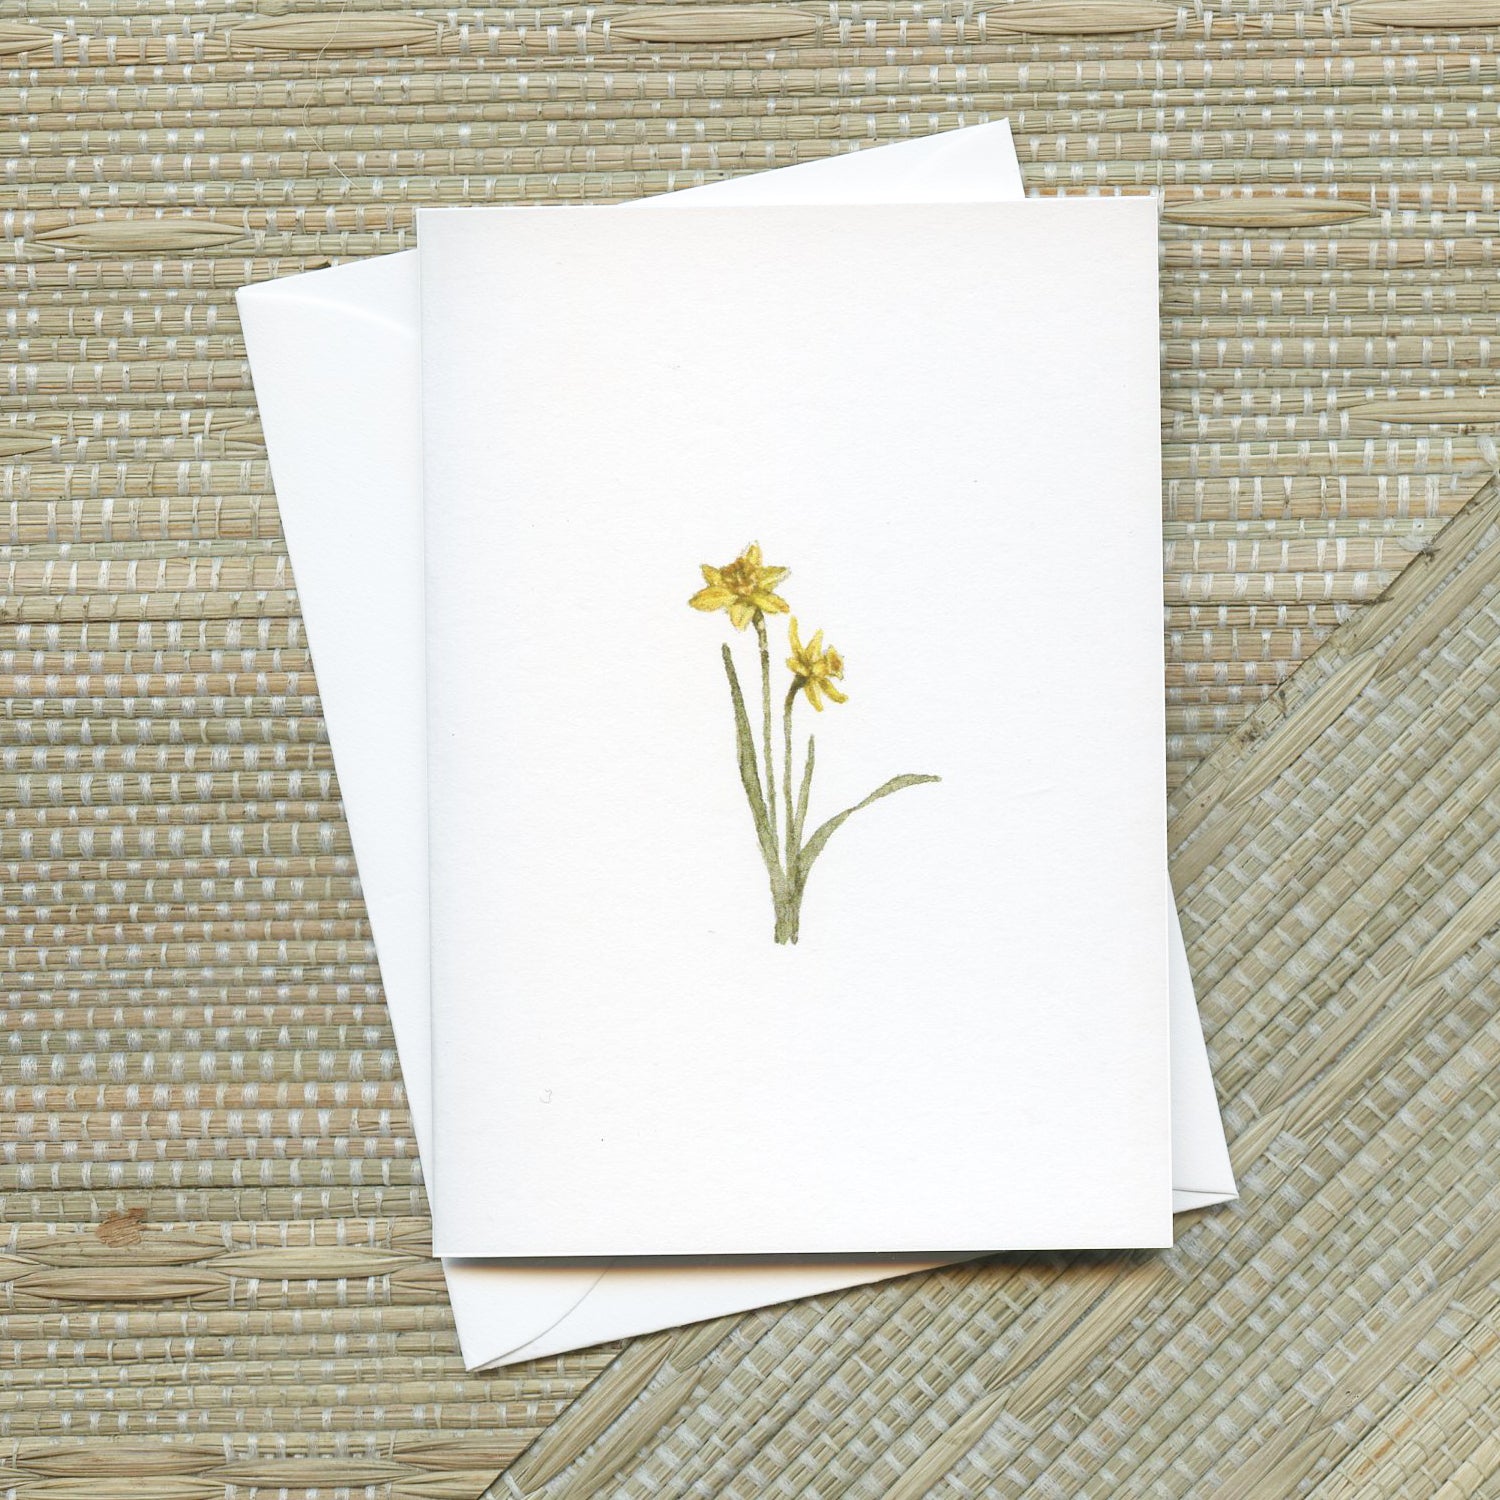 "Daffodils" Greeting Card